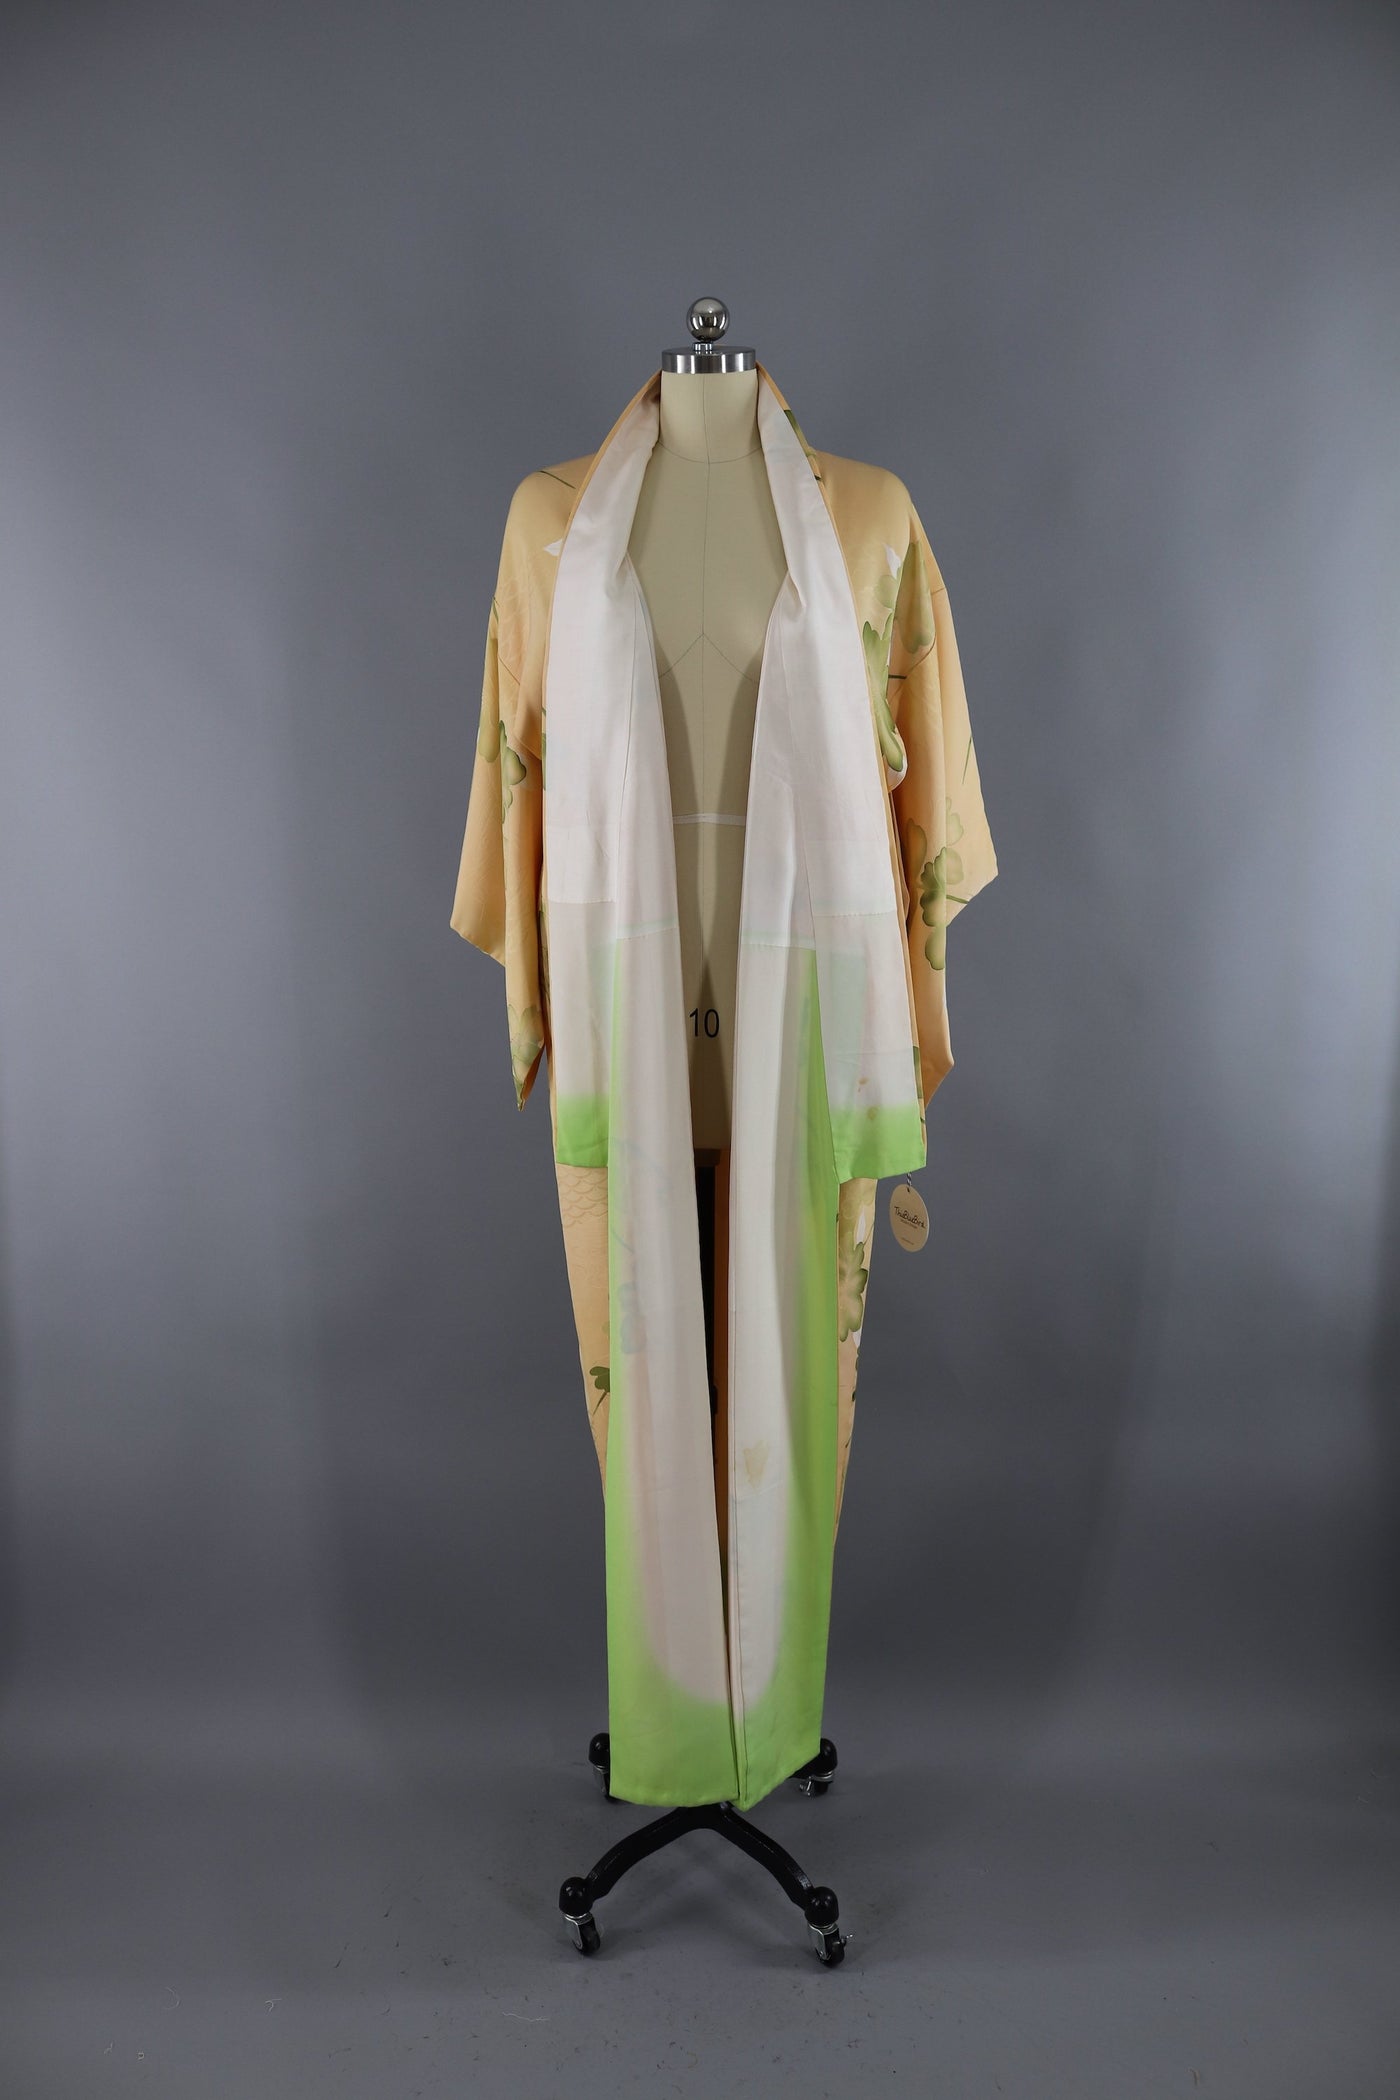 Vintage Silk Kimono Robe / Yellow and Green Floral Leaf Print - ThisBlueBird